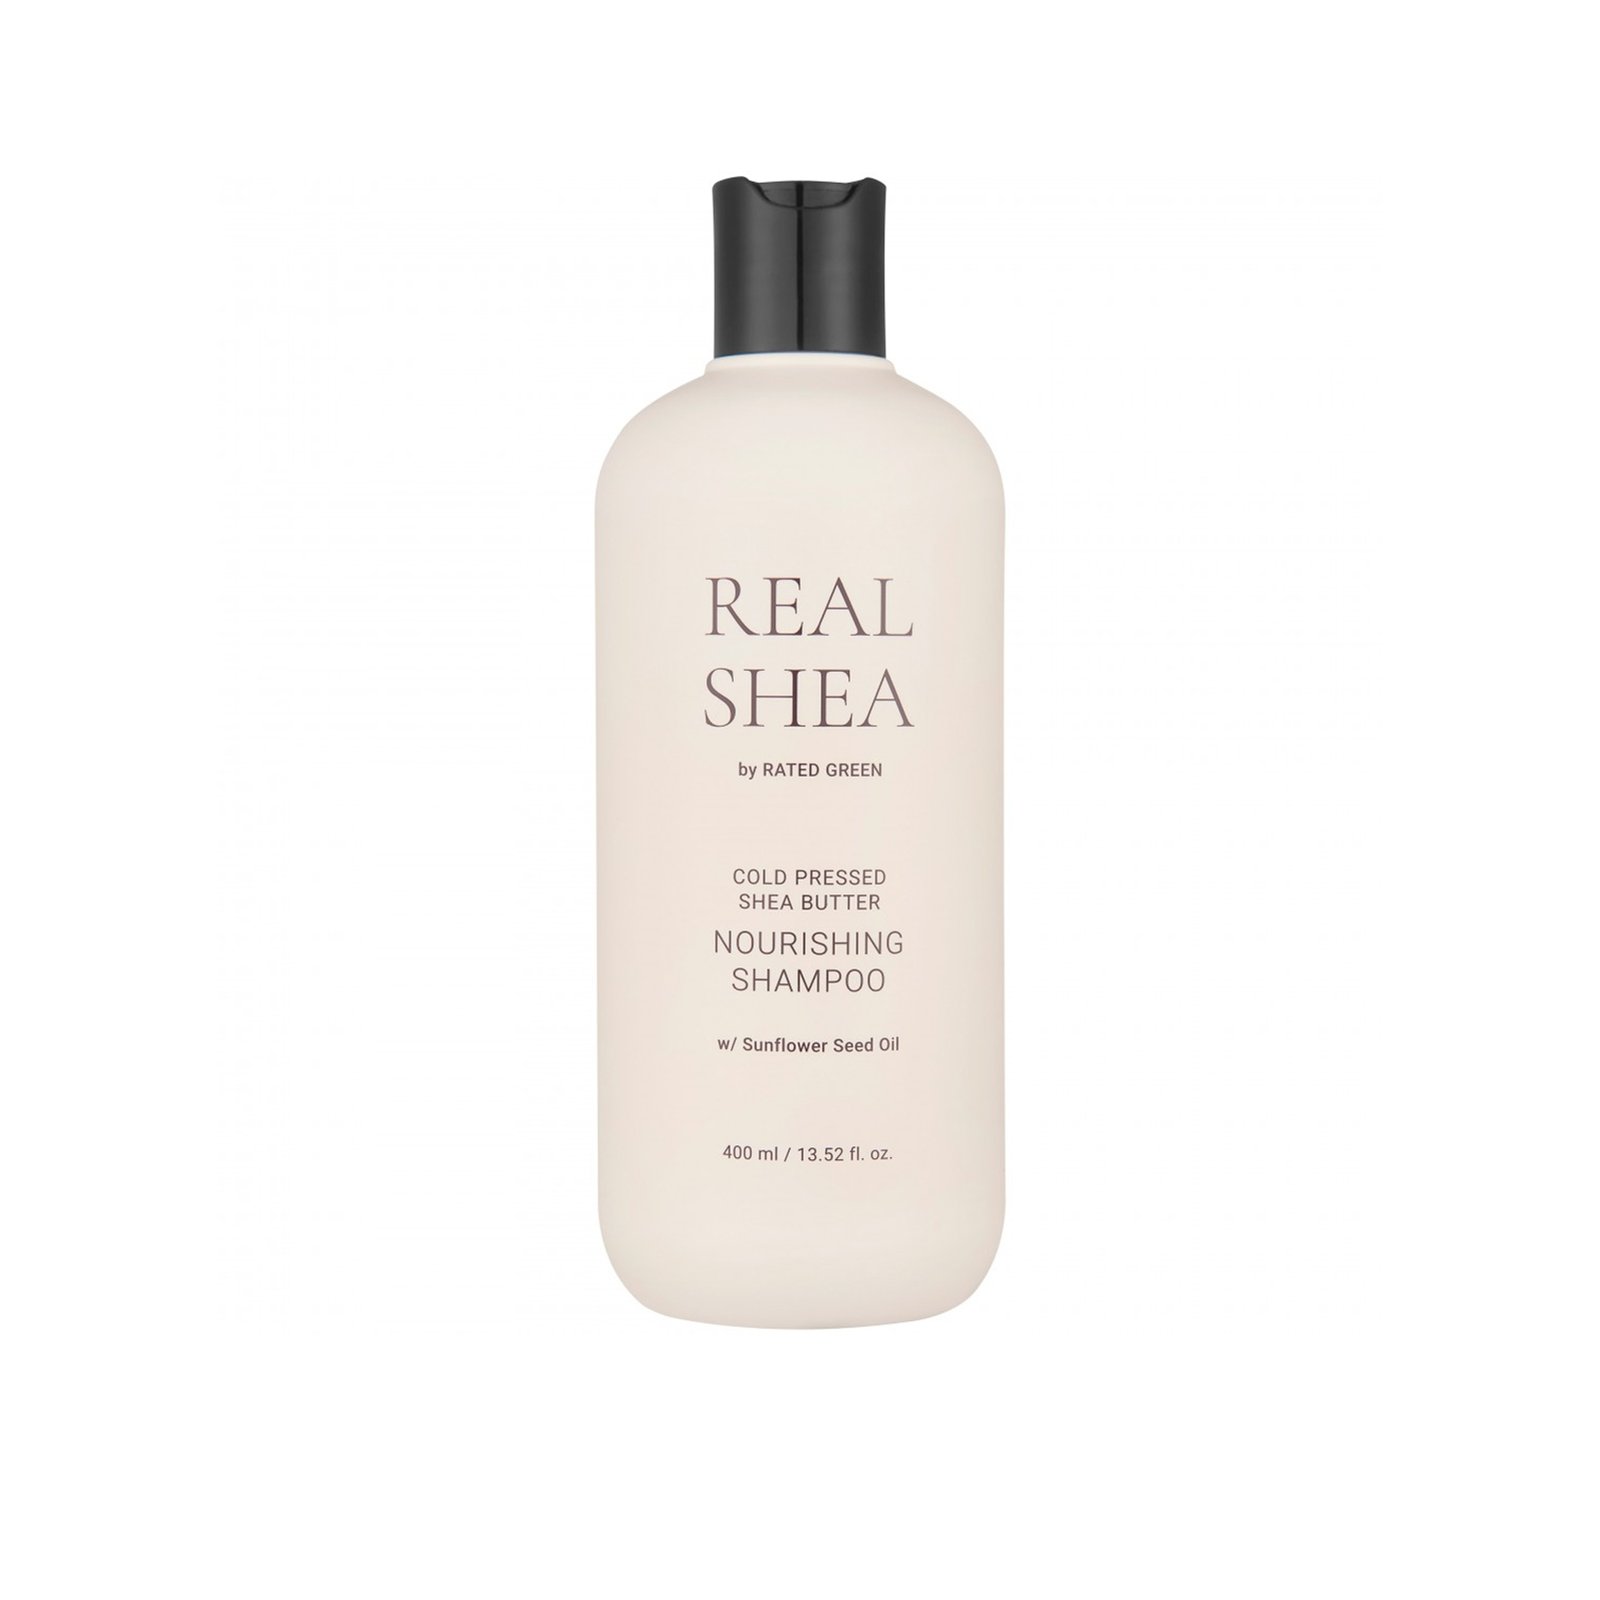 Rated Green Real Shea Nourishing Shampoo 400ml (13.52 fl oz)